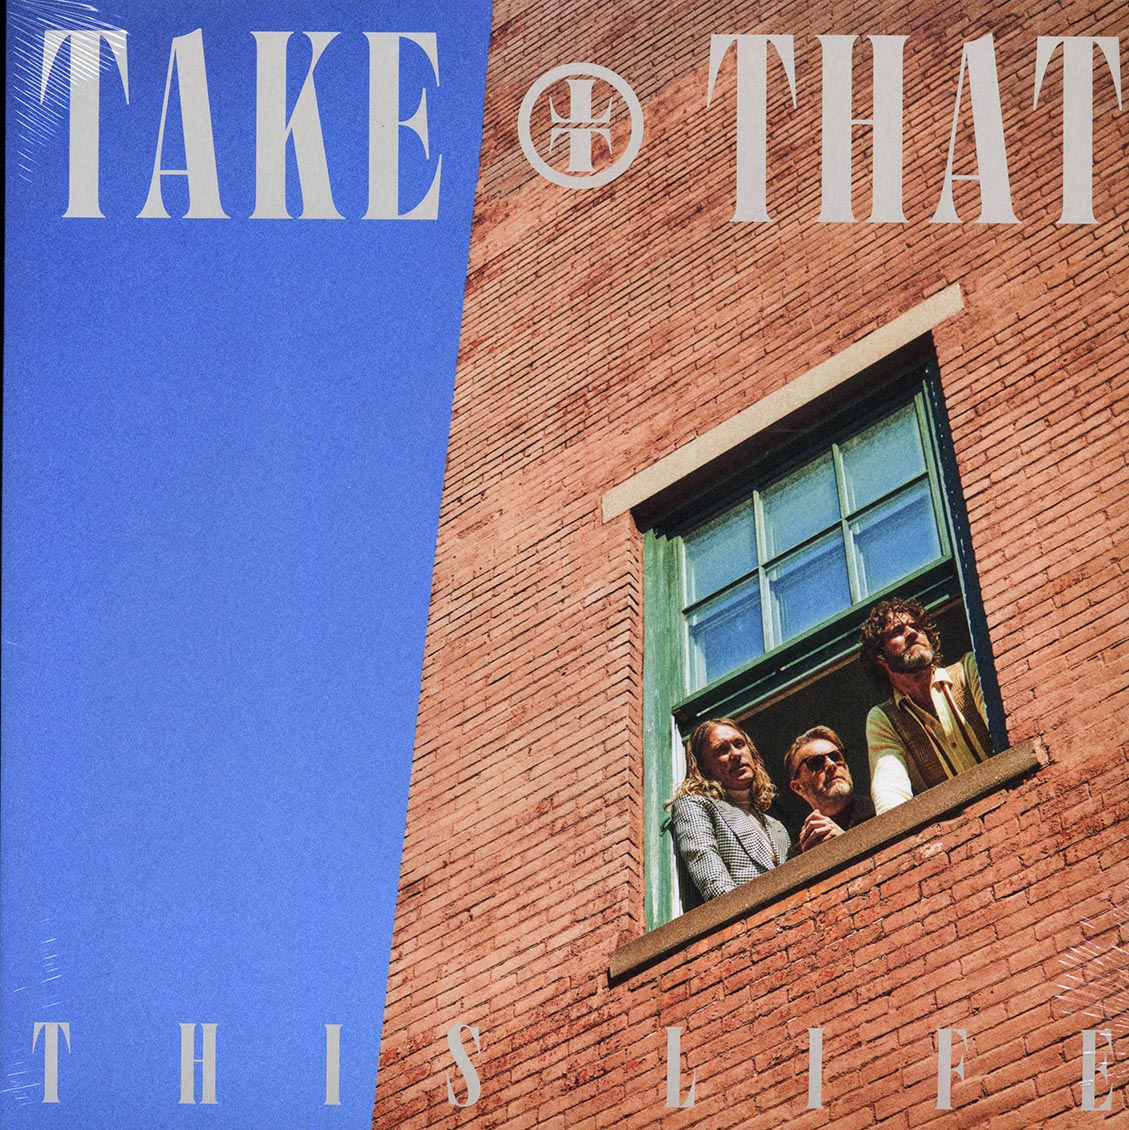 Take That - This Life - Vinyl LP